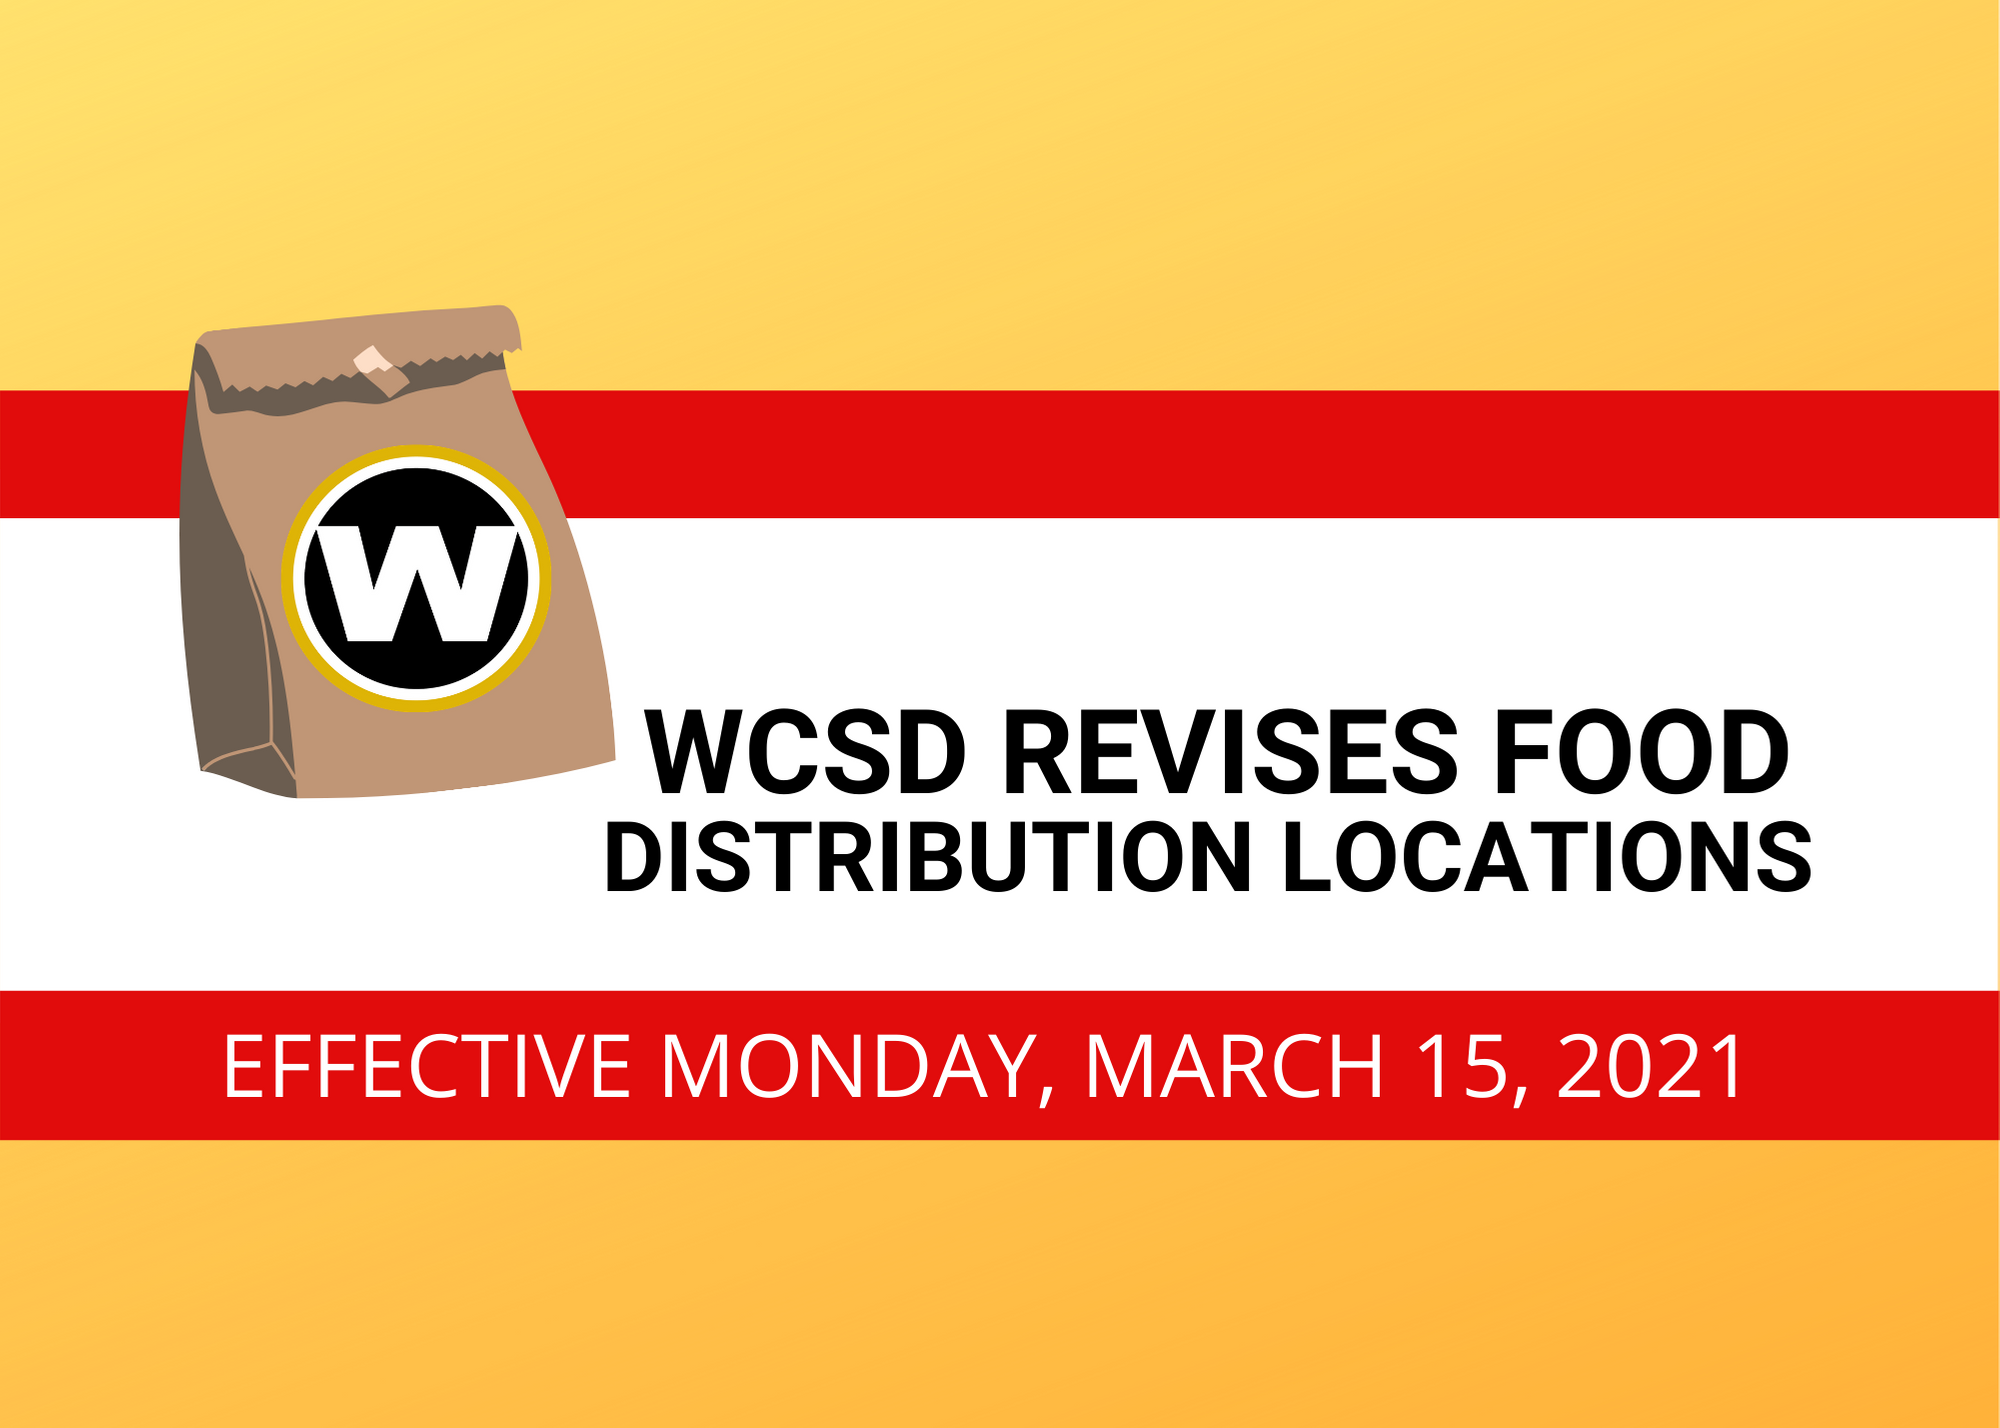 Warren City Schools Announce New Food Distribution Sites & Times